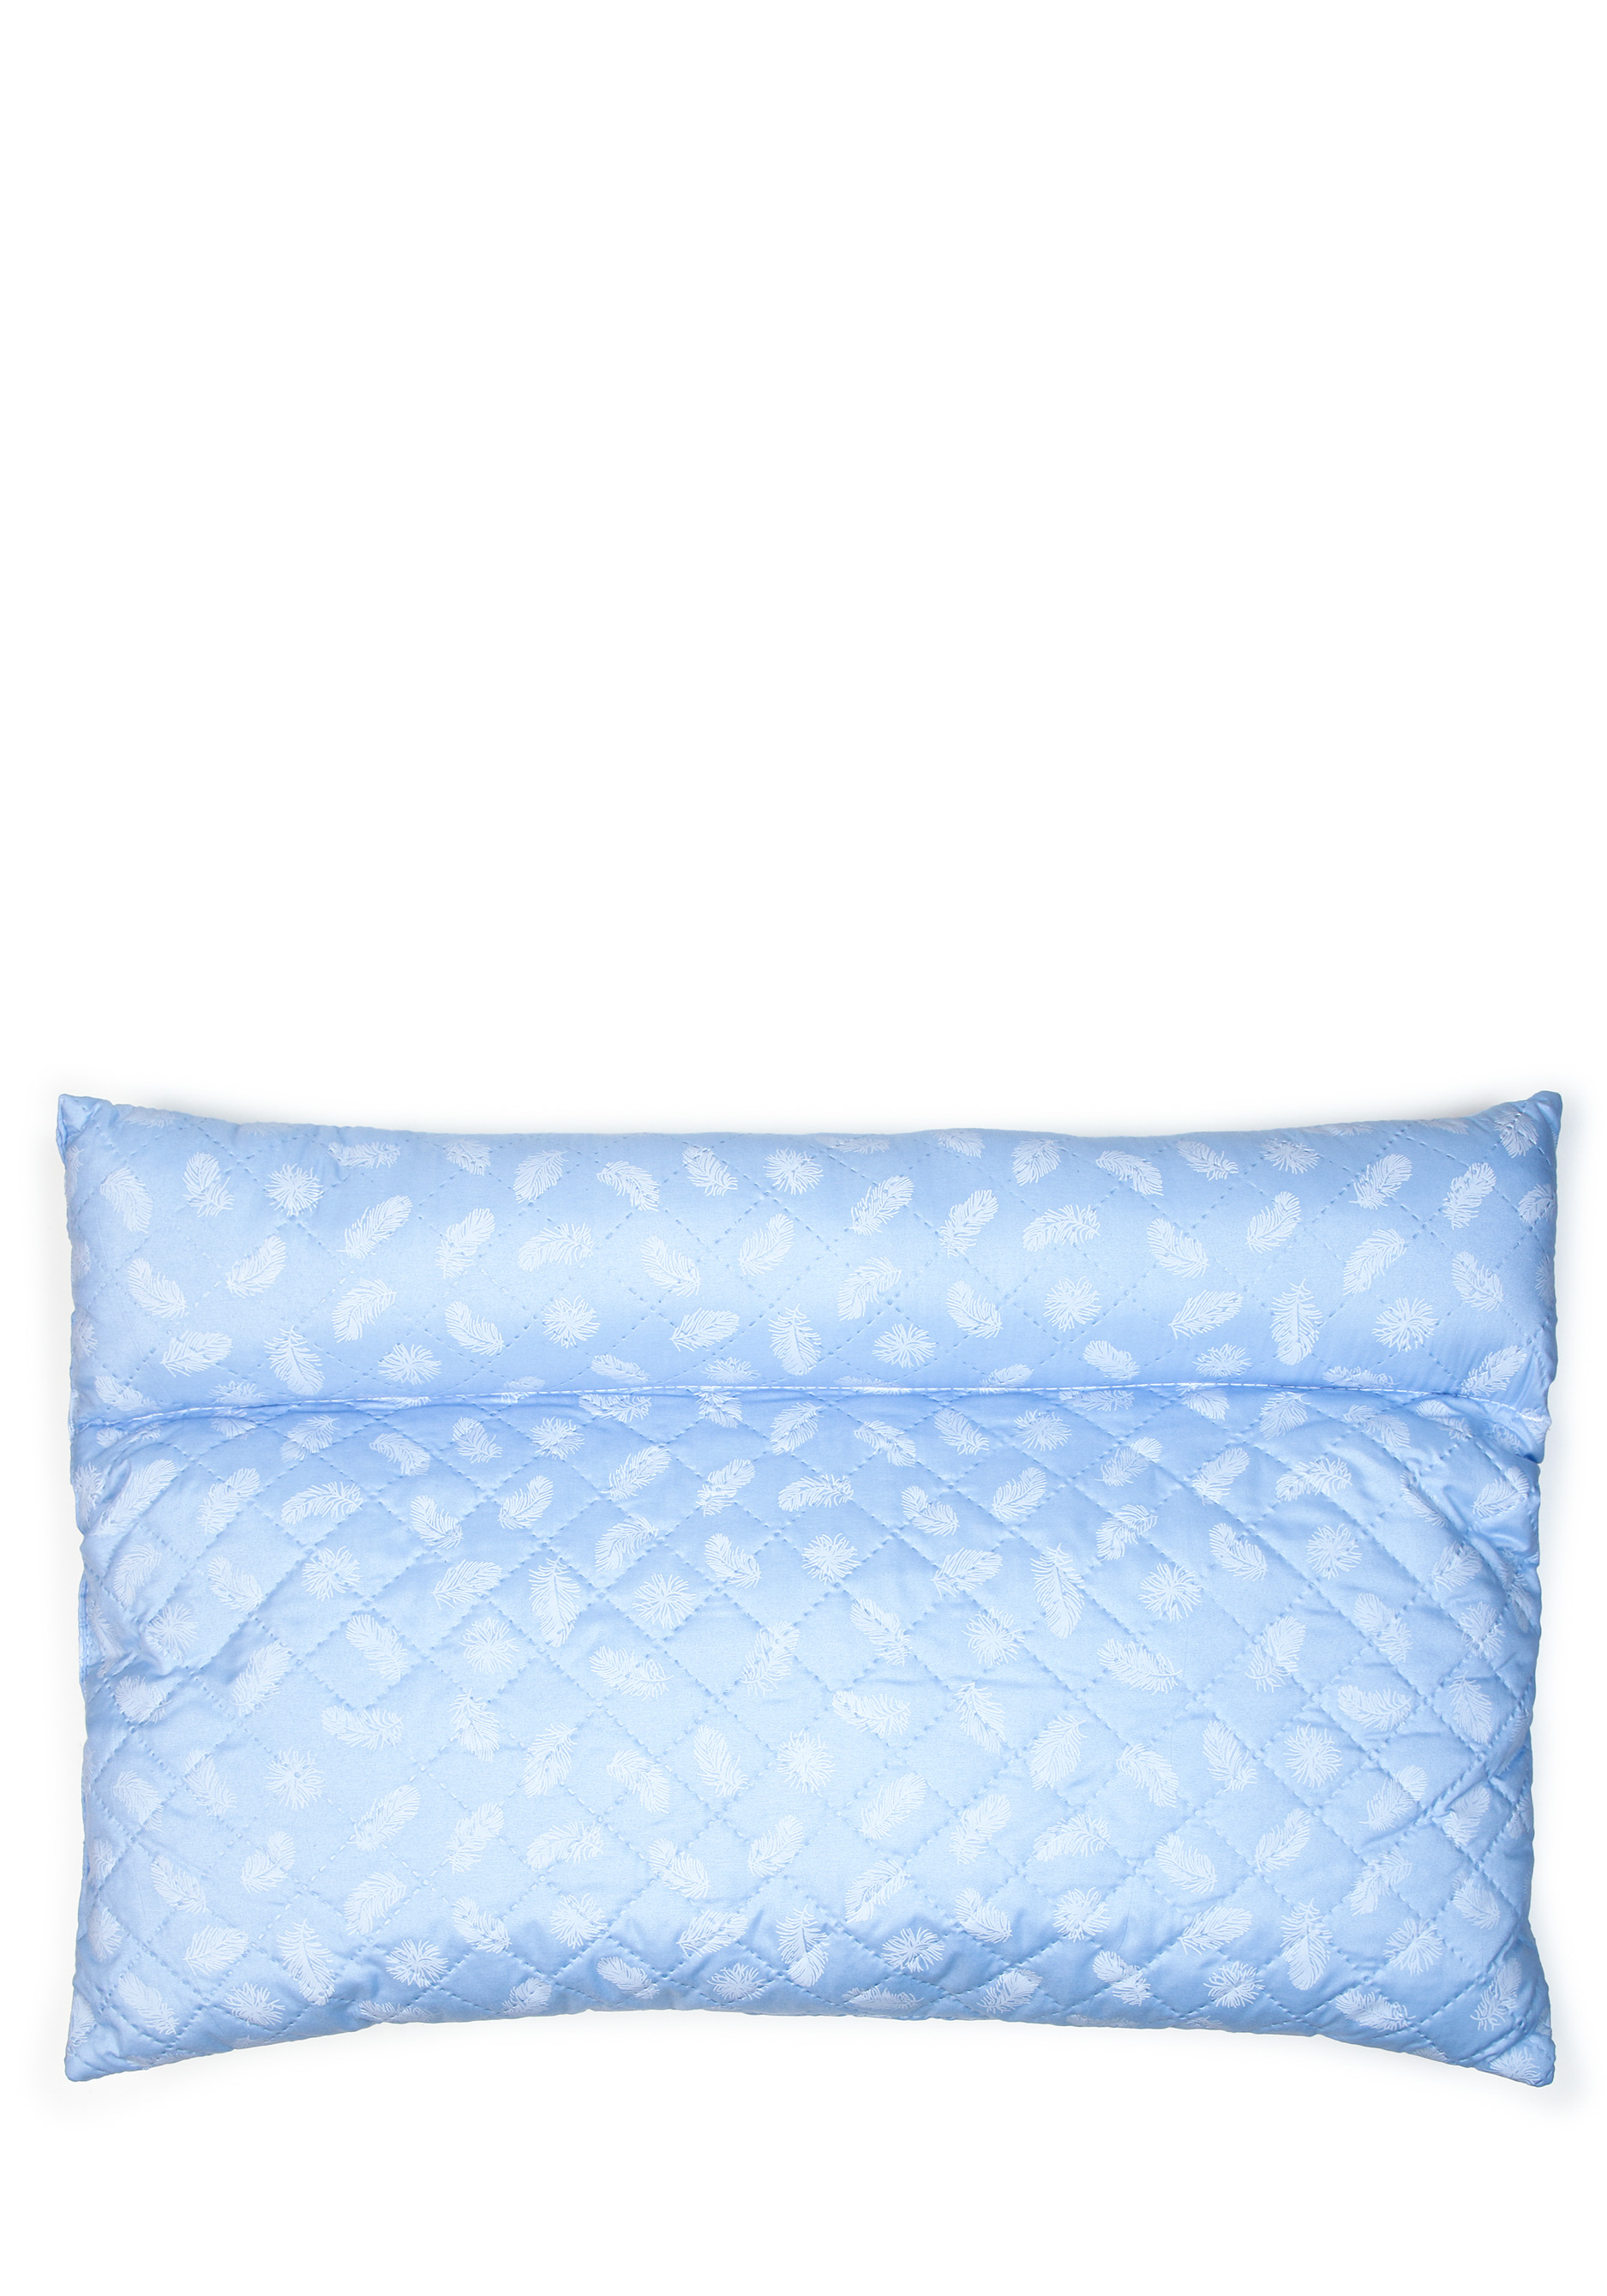 Подушка с валиком под шeю Matex, цвет голубой, размер 50*70